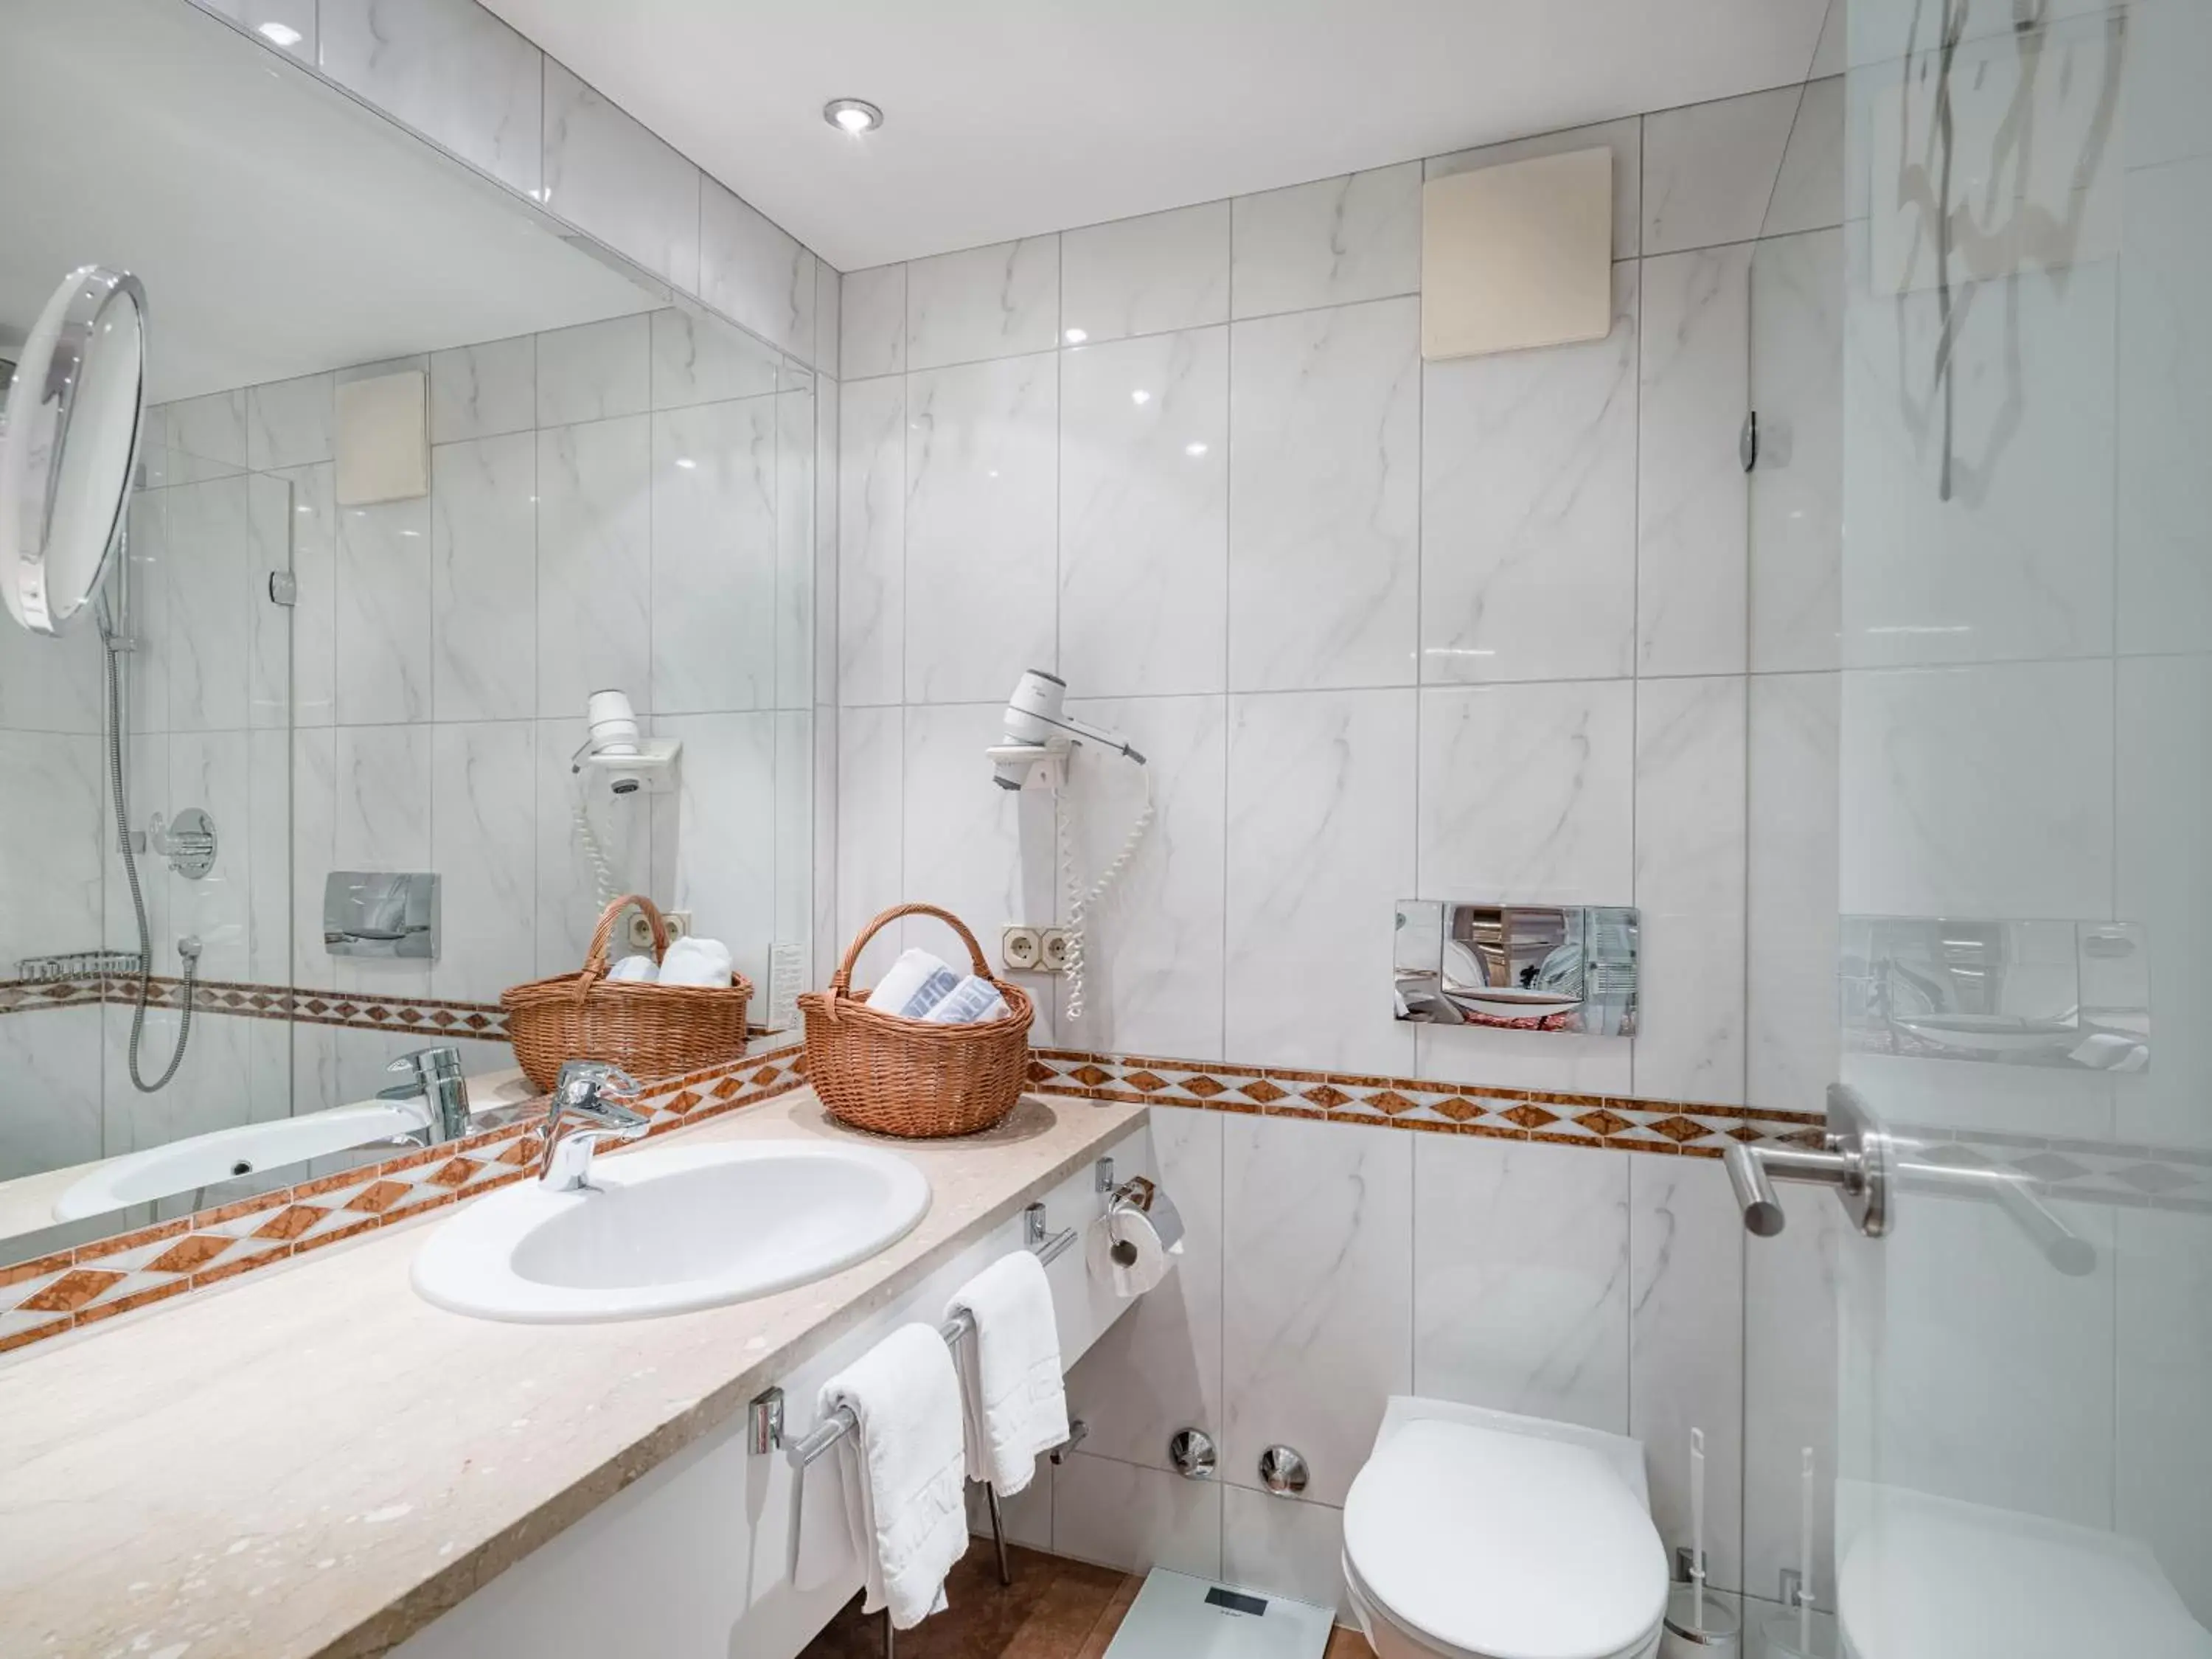 Bathroom in Hotel Norica - Thermenhotels Gastein mit dem Bademantel direkt in die Therme